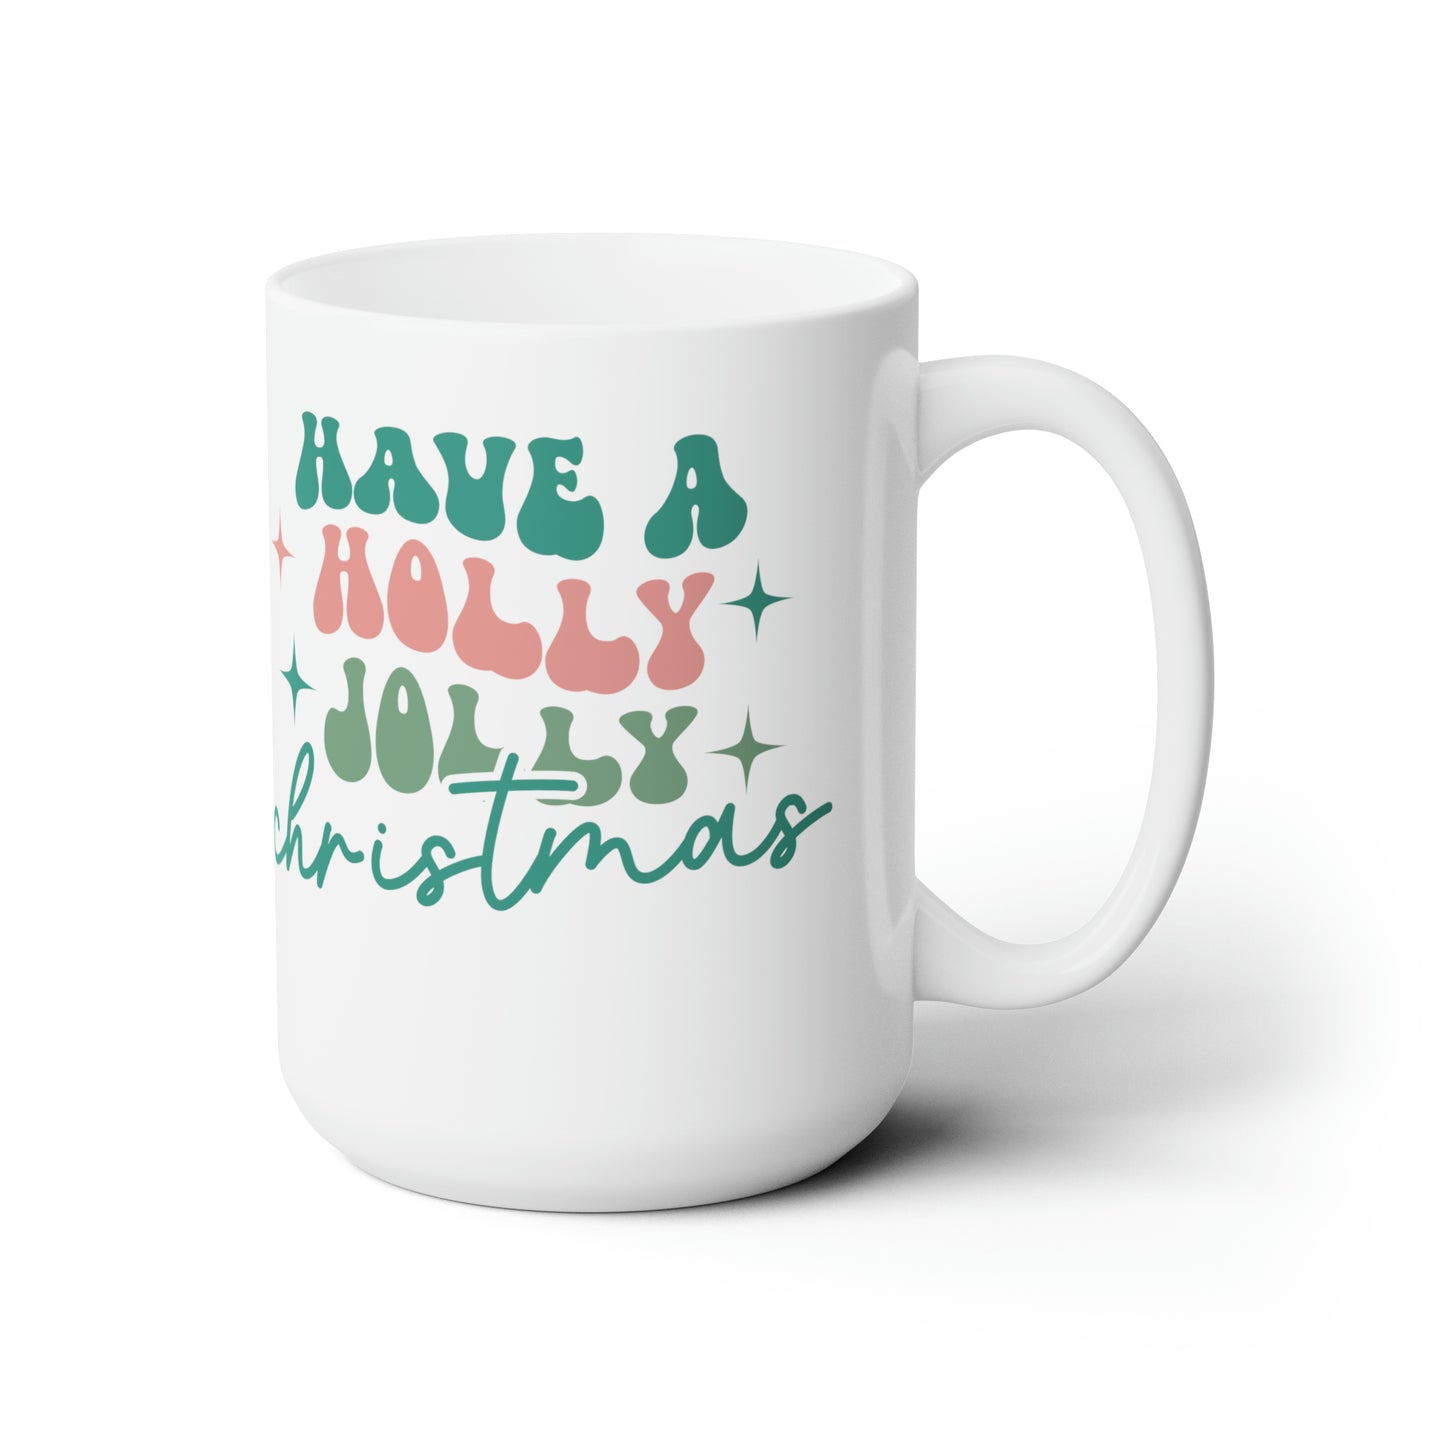 Retro Holly Jolly Christmas Coffee Hot Tea Cocoa Mug Gift Idea